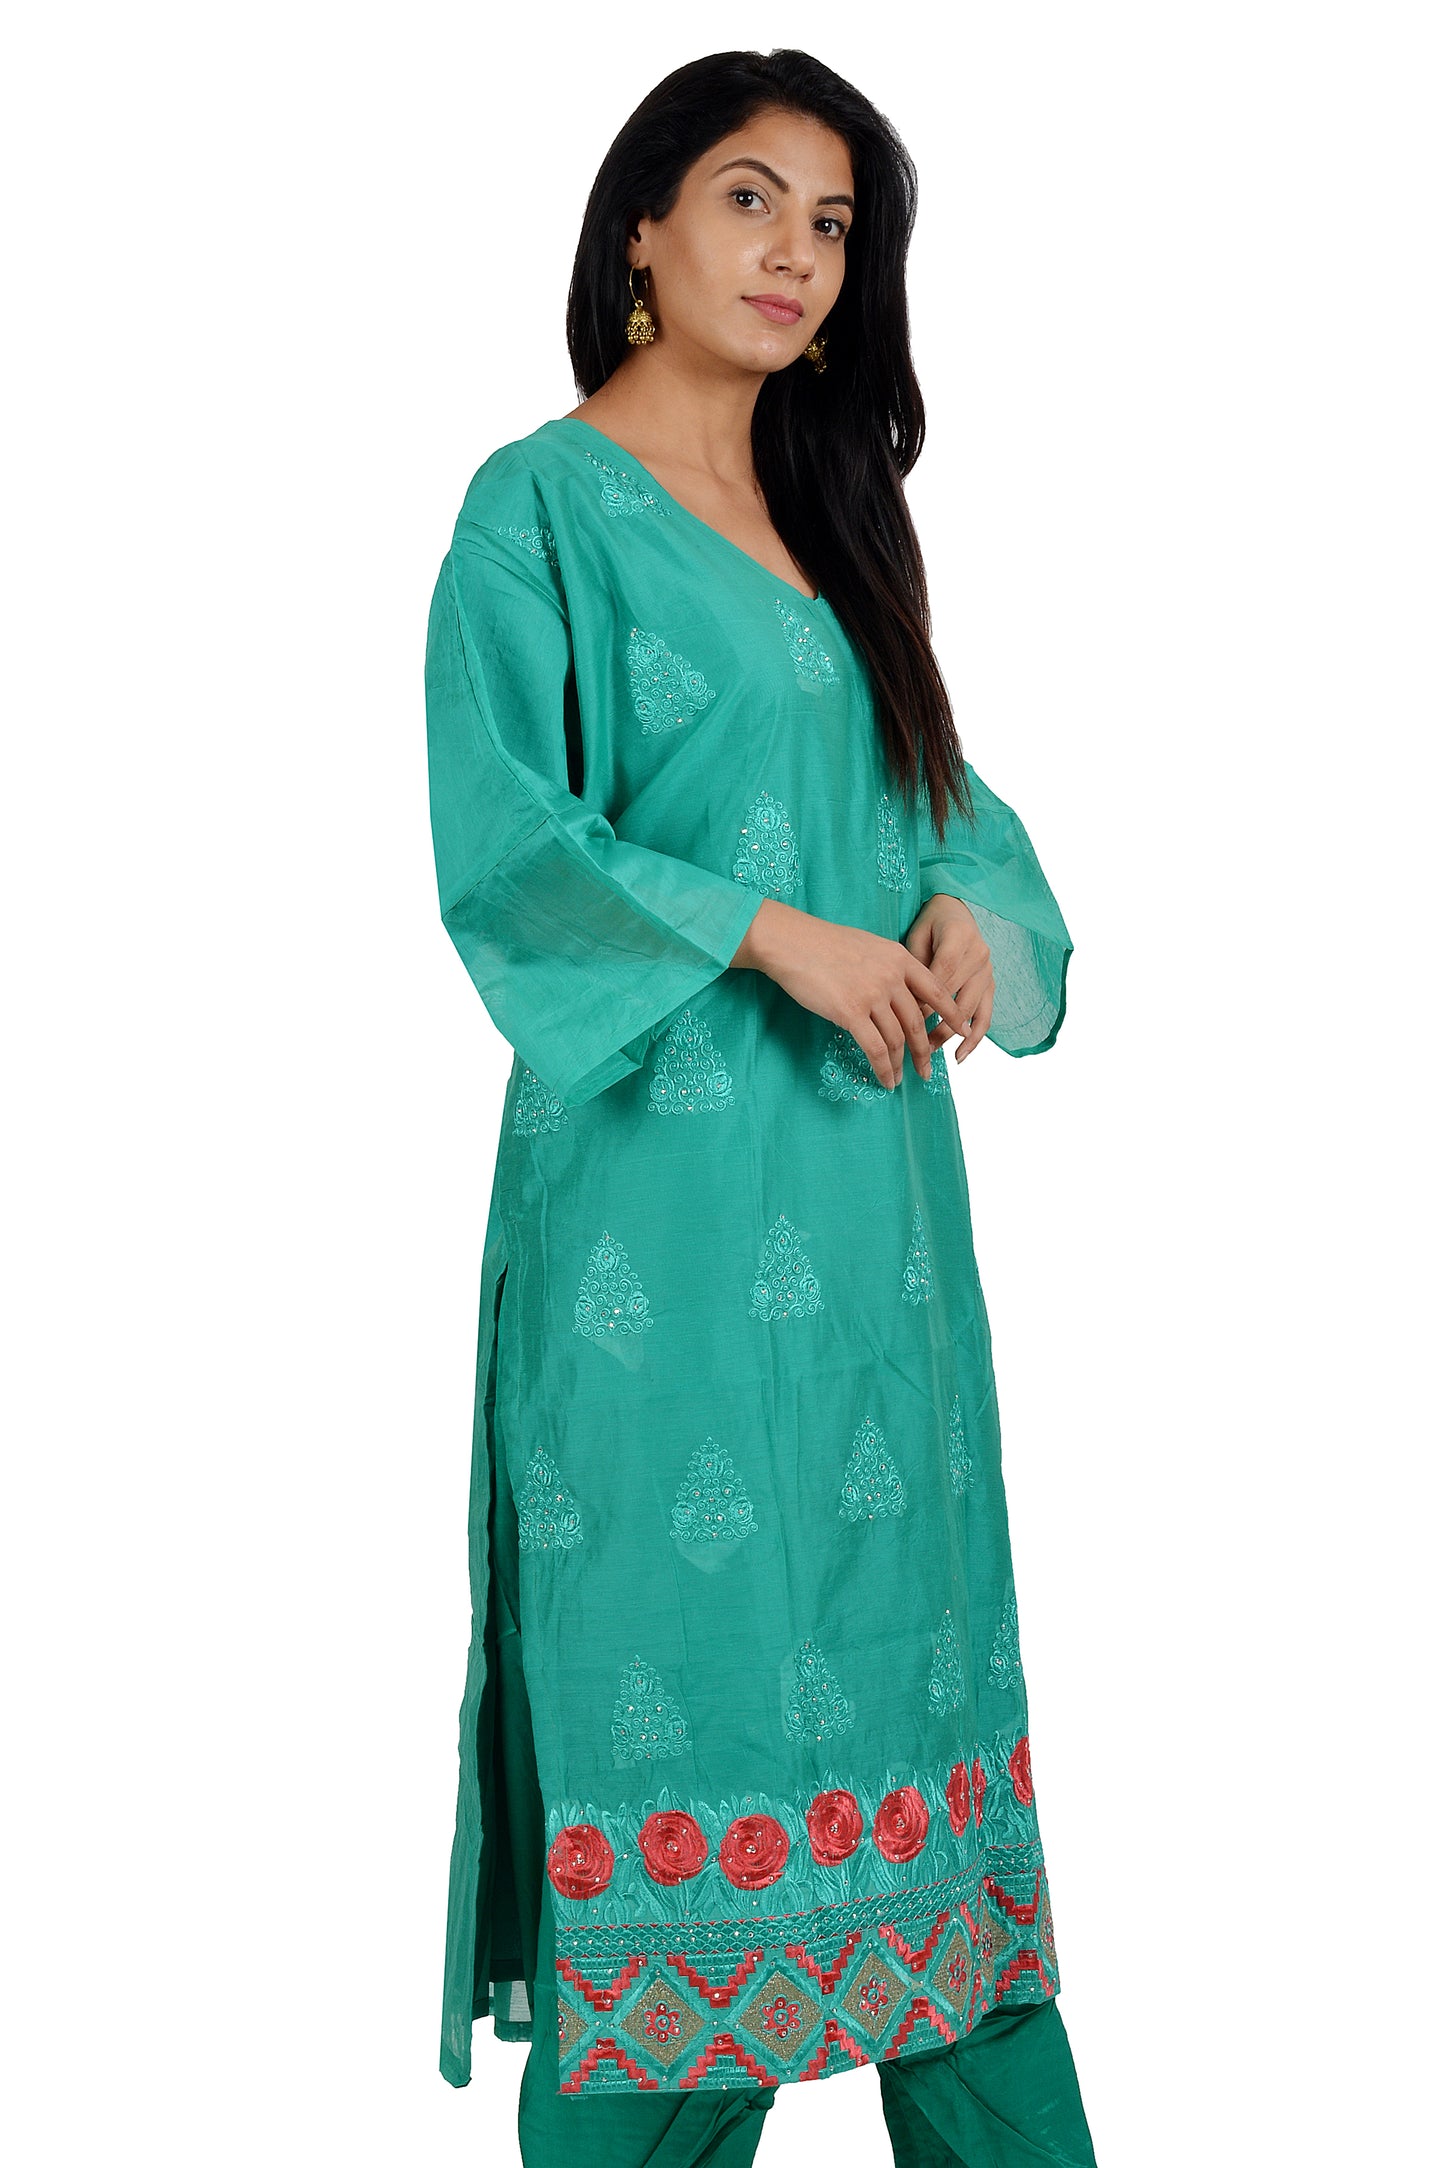 Green Cotton Embroidered Plus Size 56 Salwar Kameez Dress